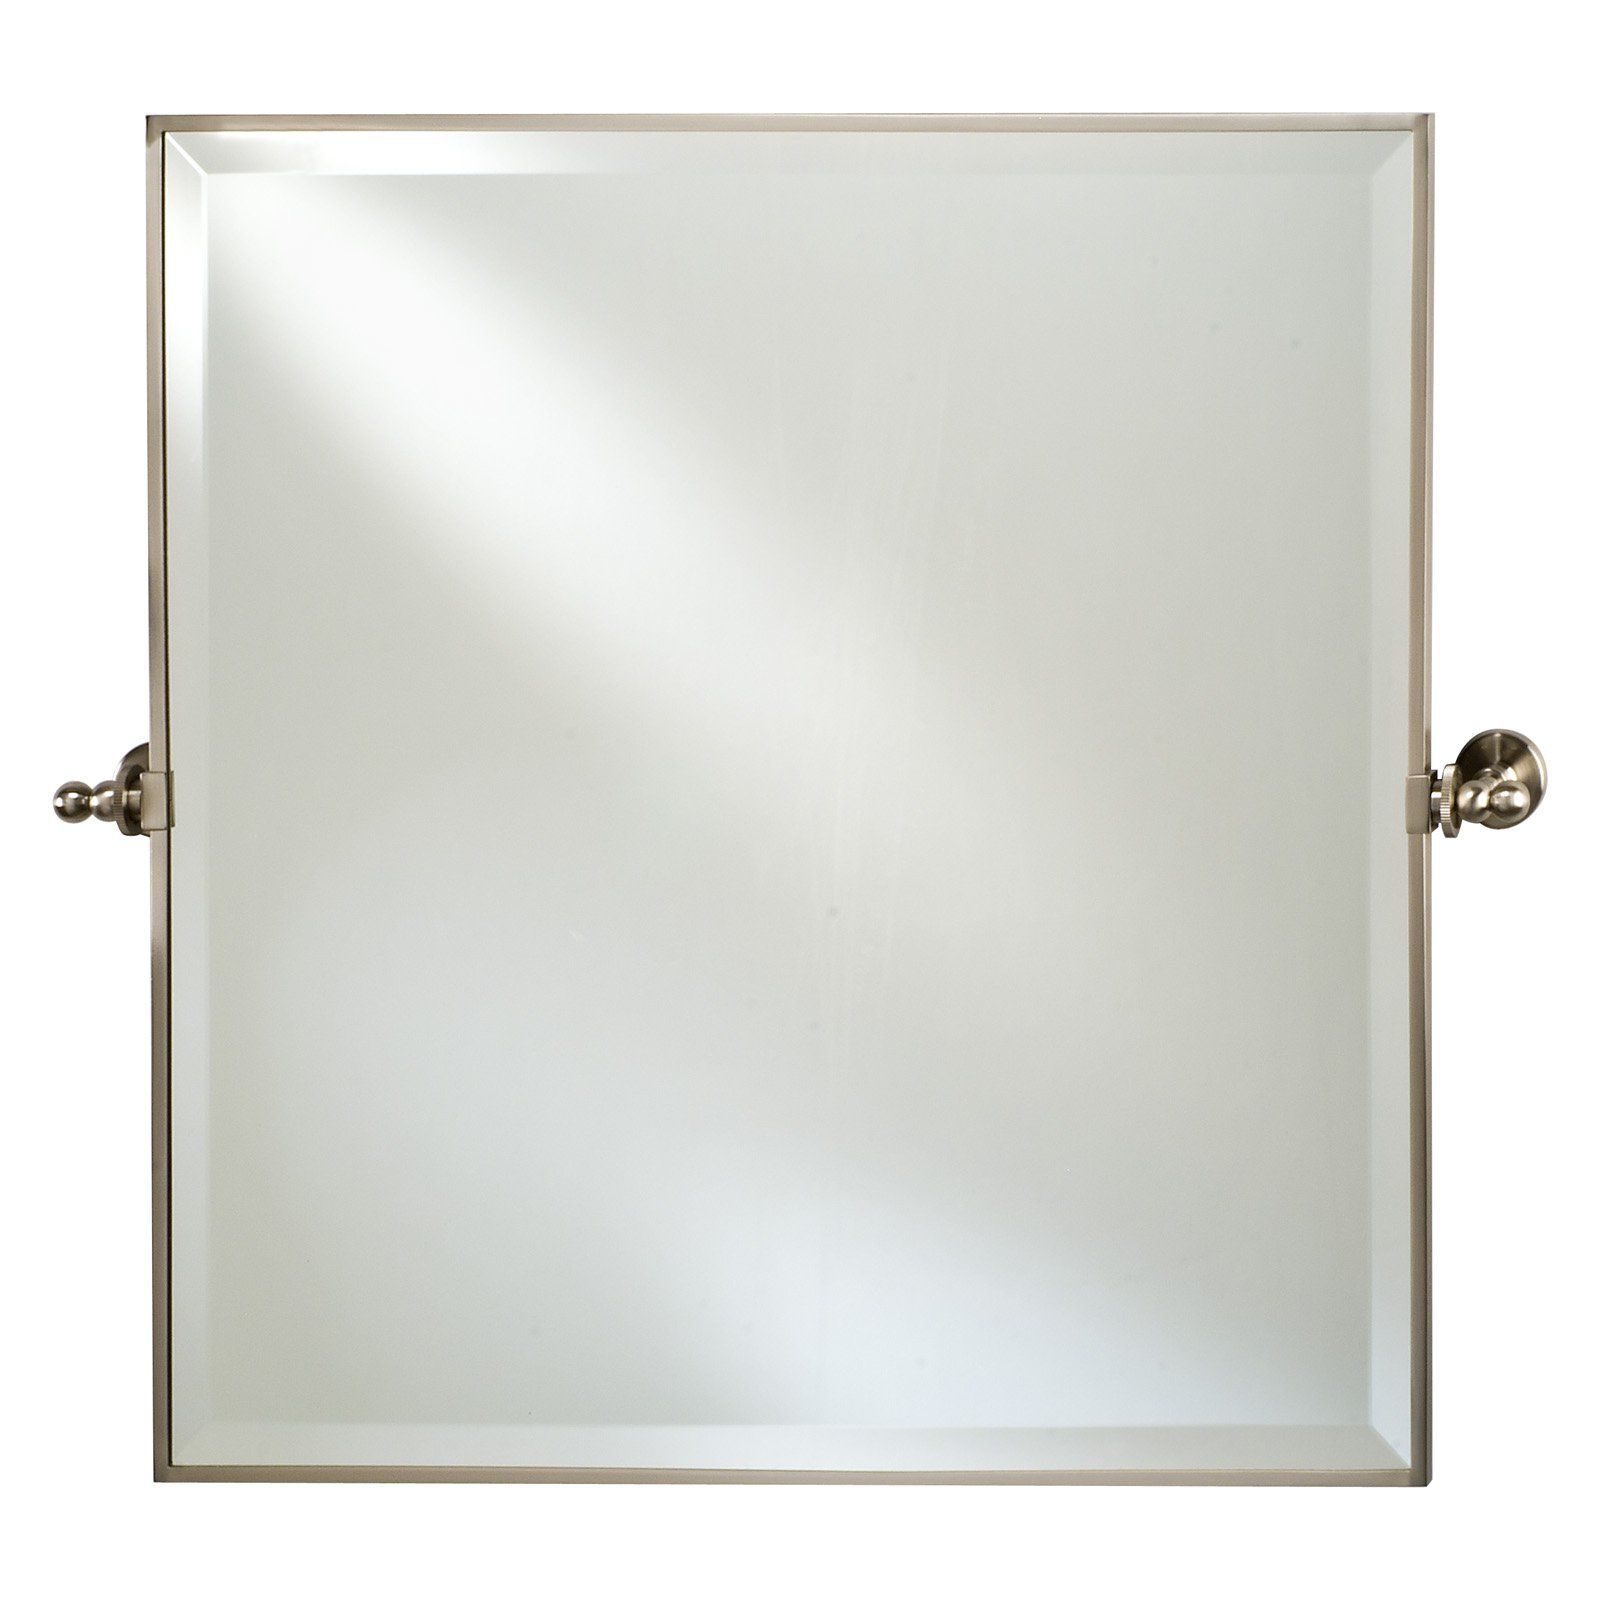 Newest Tilt Mirror Bathroom 28 Images Bathroom Tilting Mirror Wood Regarding Tilting Wall Mirrors (View 9 of 20)